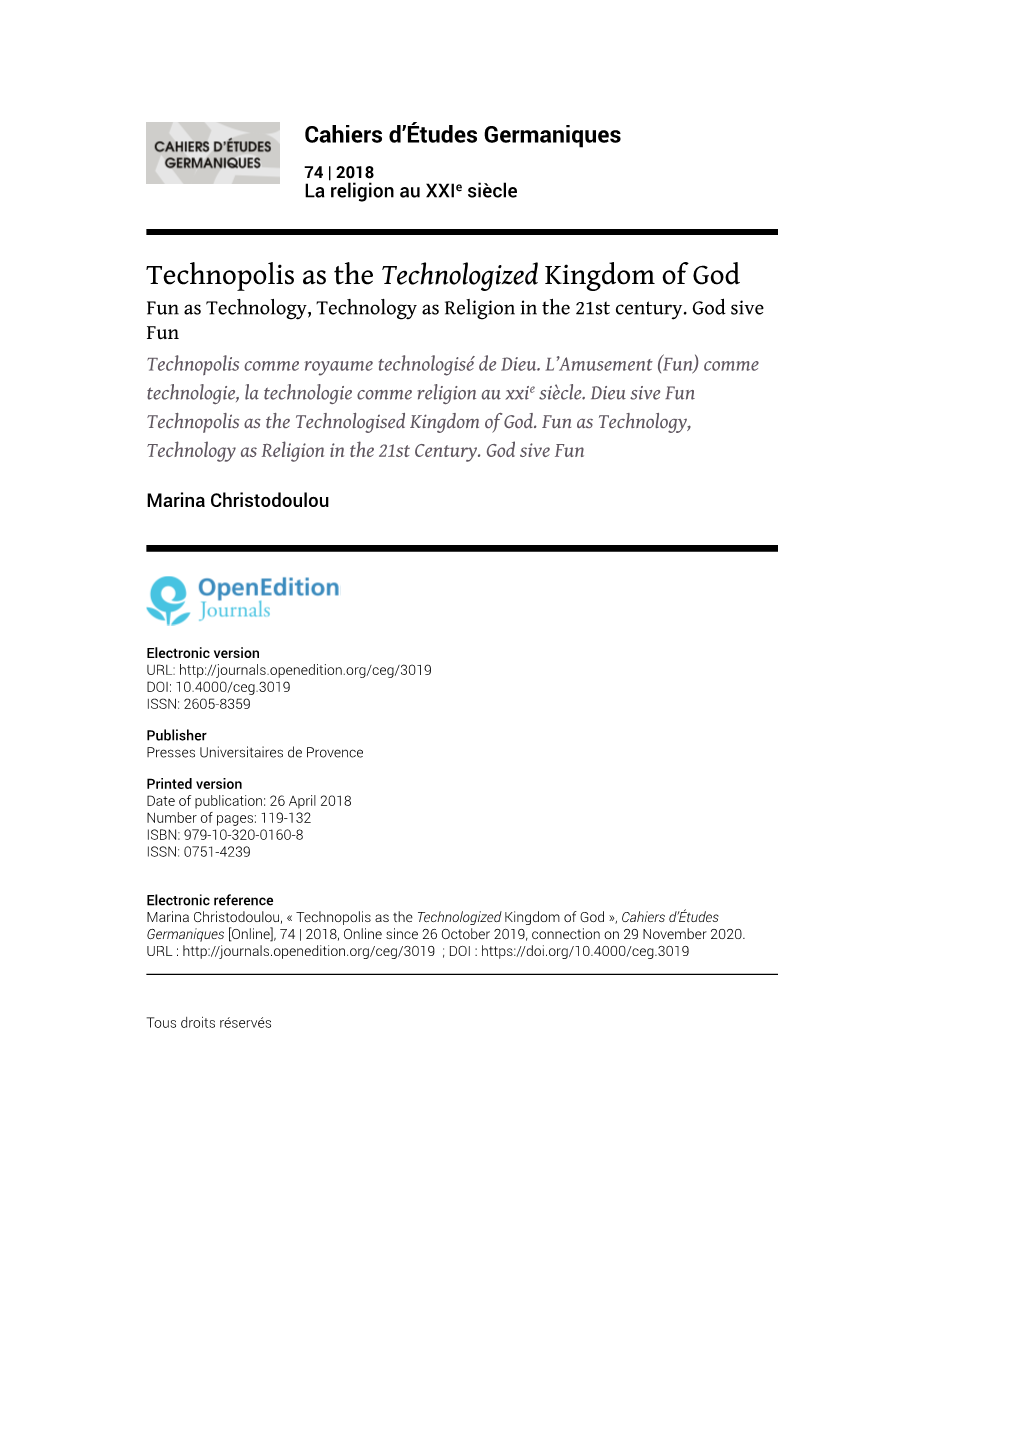 Technopolis As the Technologized Kingdom of God Fun As Technology, Technology As Religion in the 21St Century